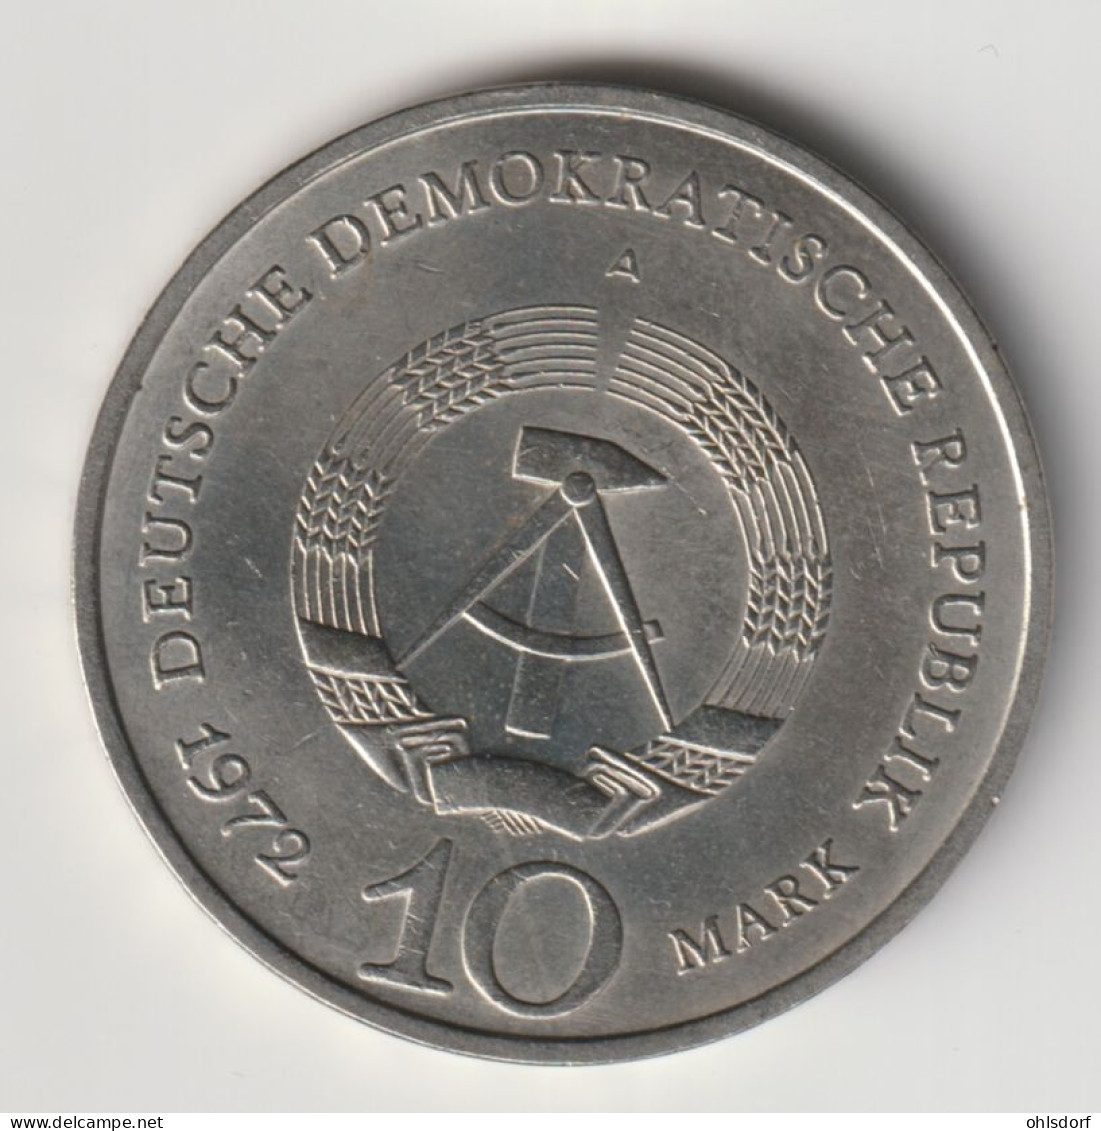 DDR 1972: 10 Mark, Buchenwald, KM 38 - 10 Mark